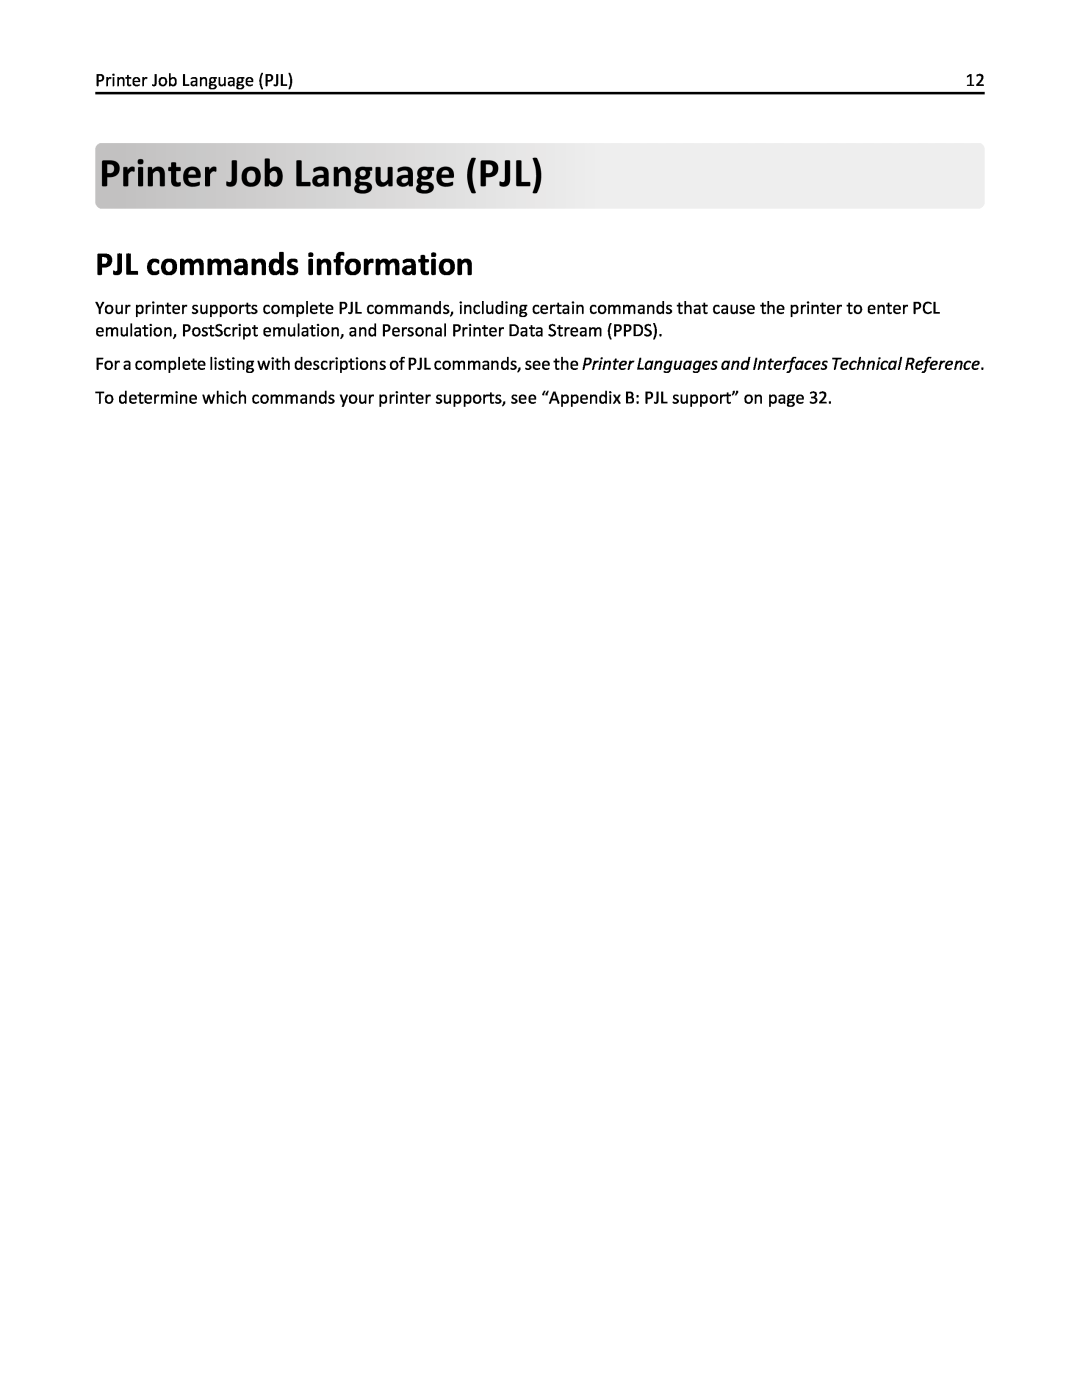 Lexmark 746dtn, 748dte, 748de, 746de, 746dn, 746n, 748e manual Printer Job Language PJL, PJL commands information 